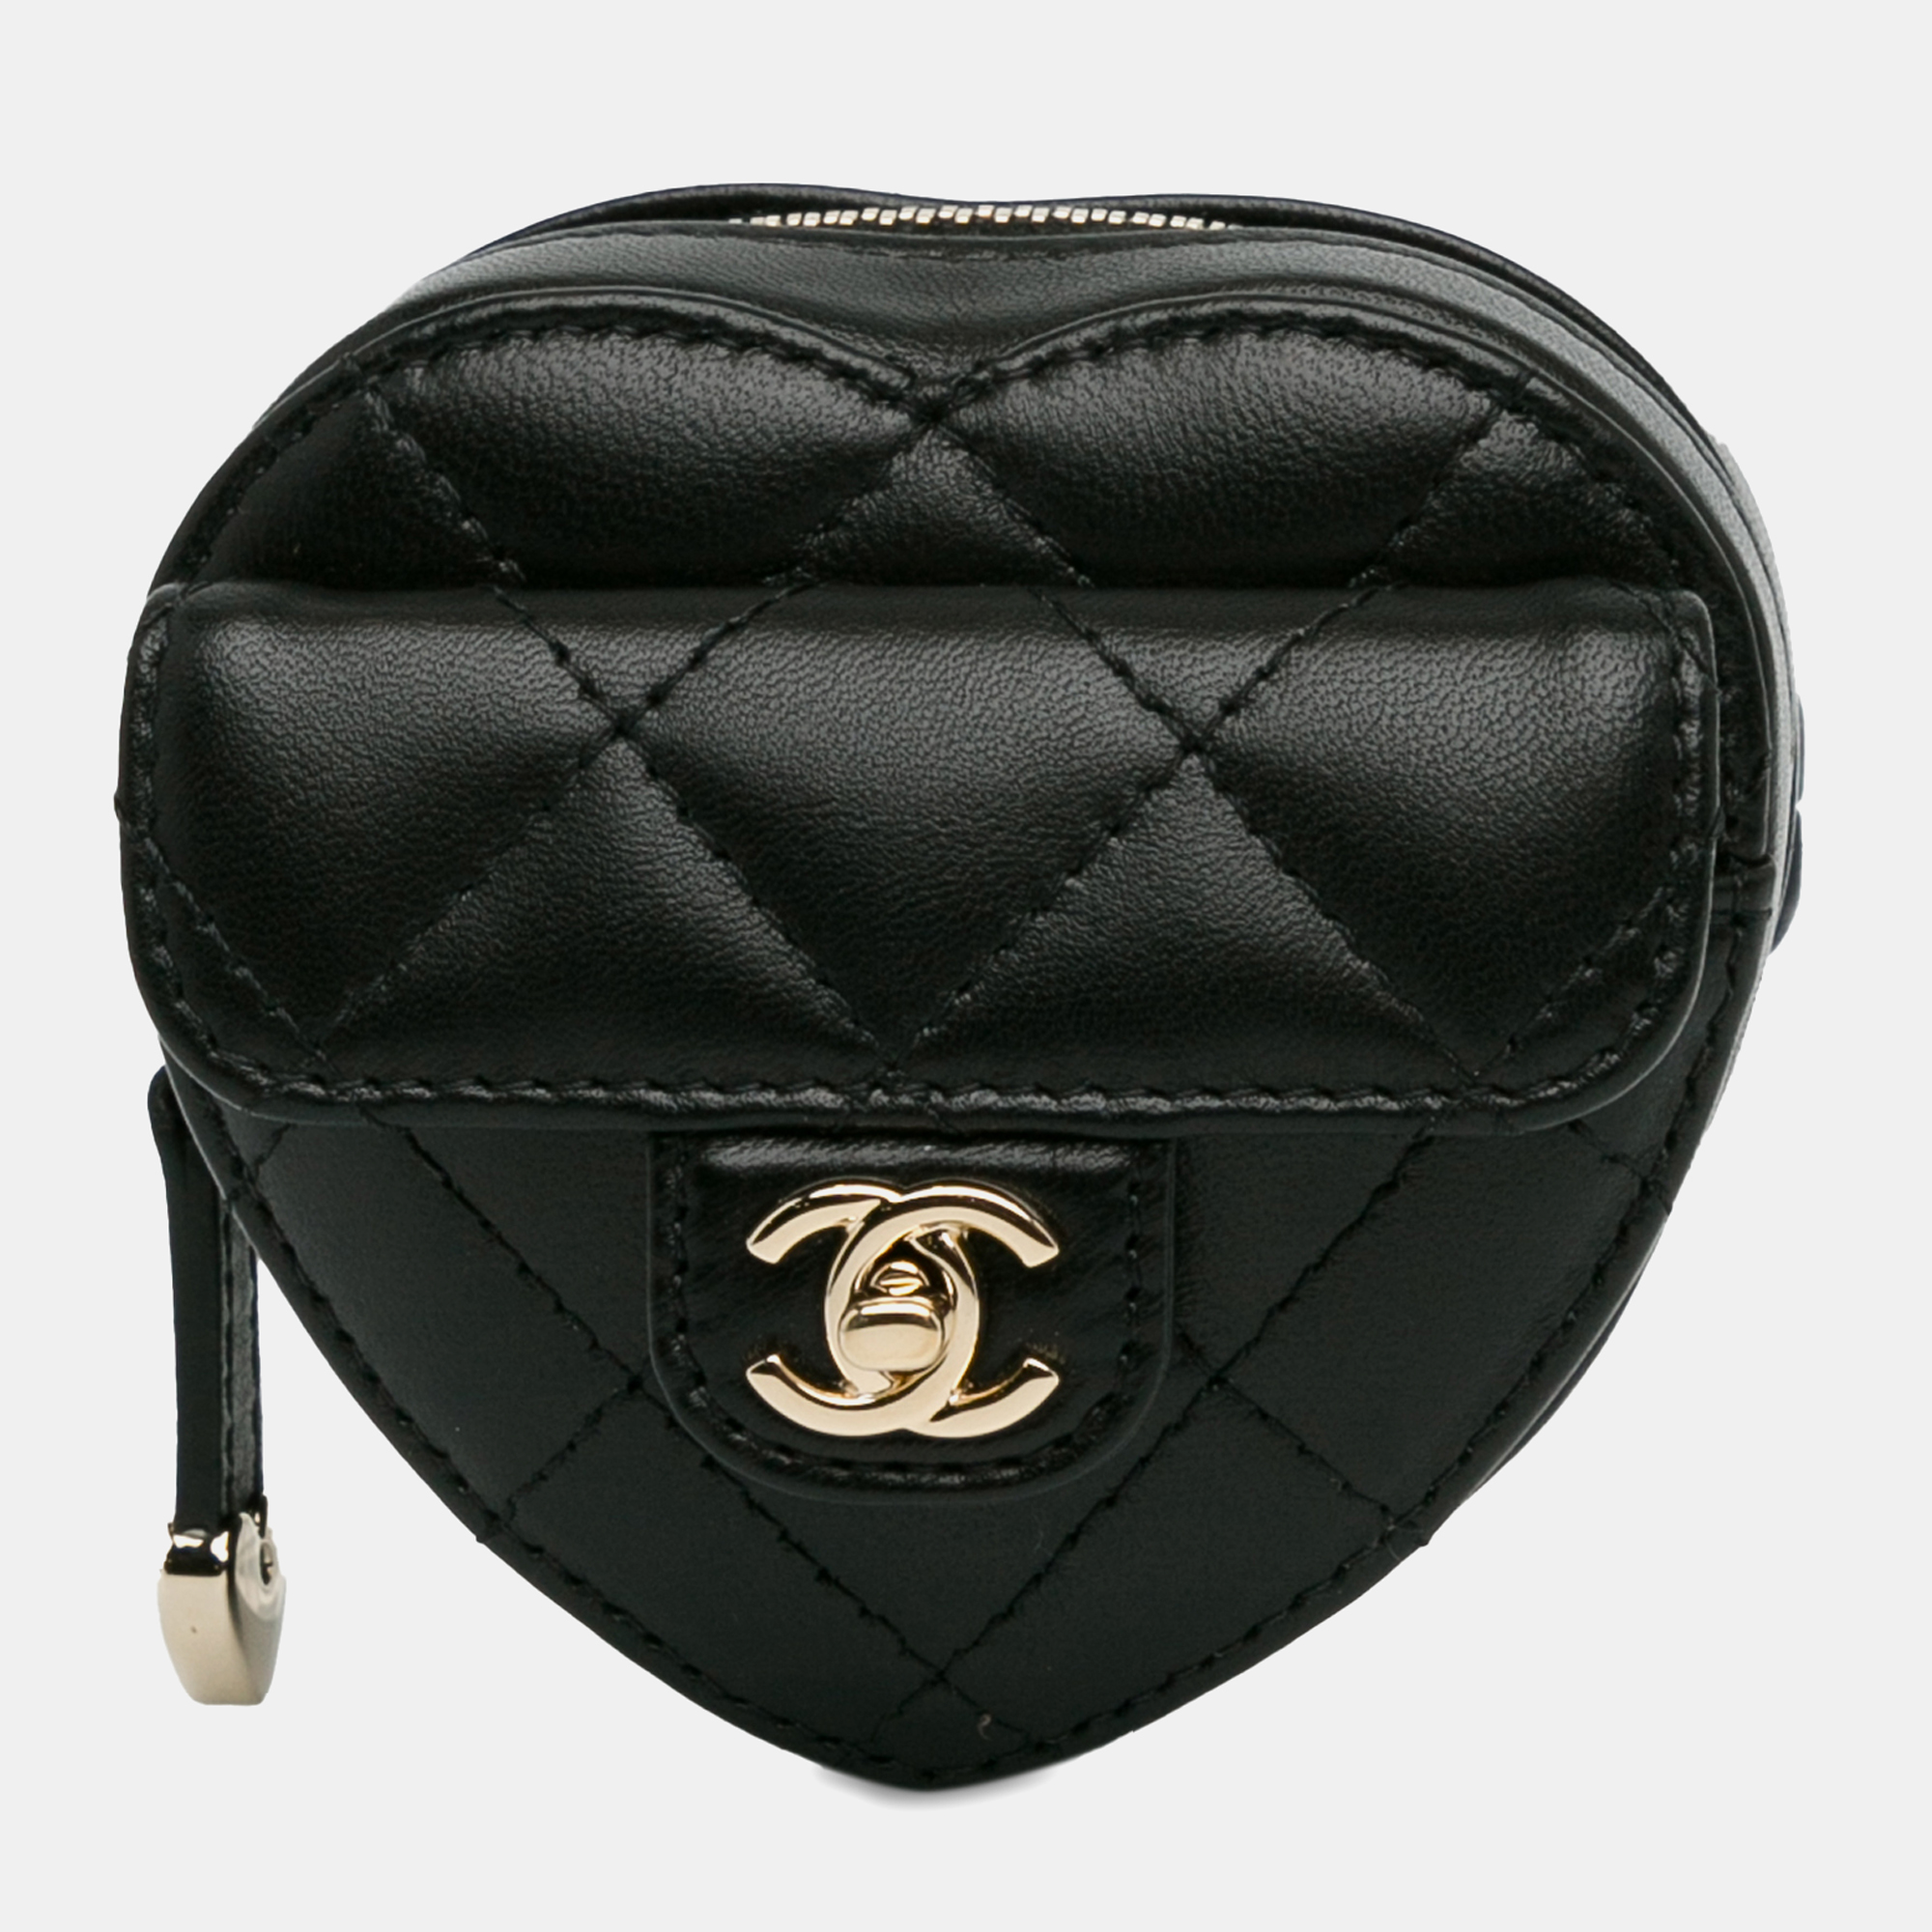 Chanel lambskin cc in love heart zipped arm coin purse